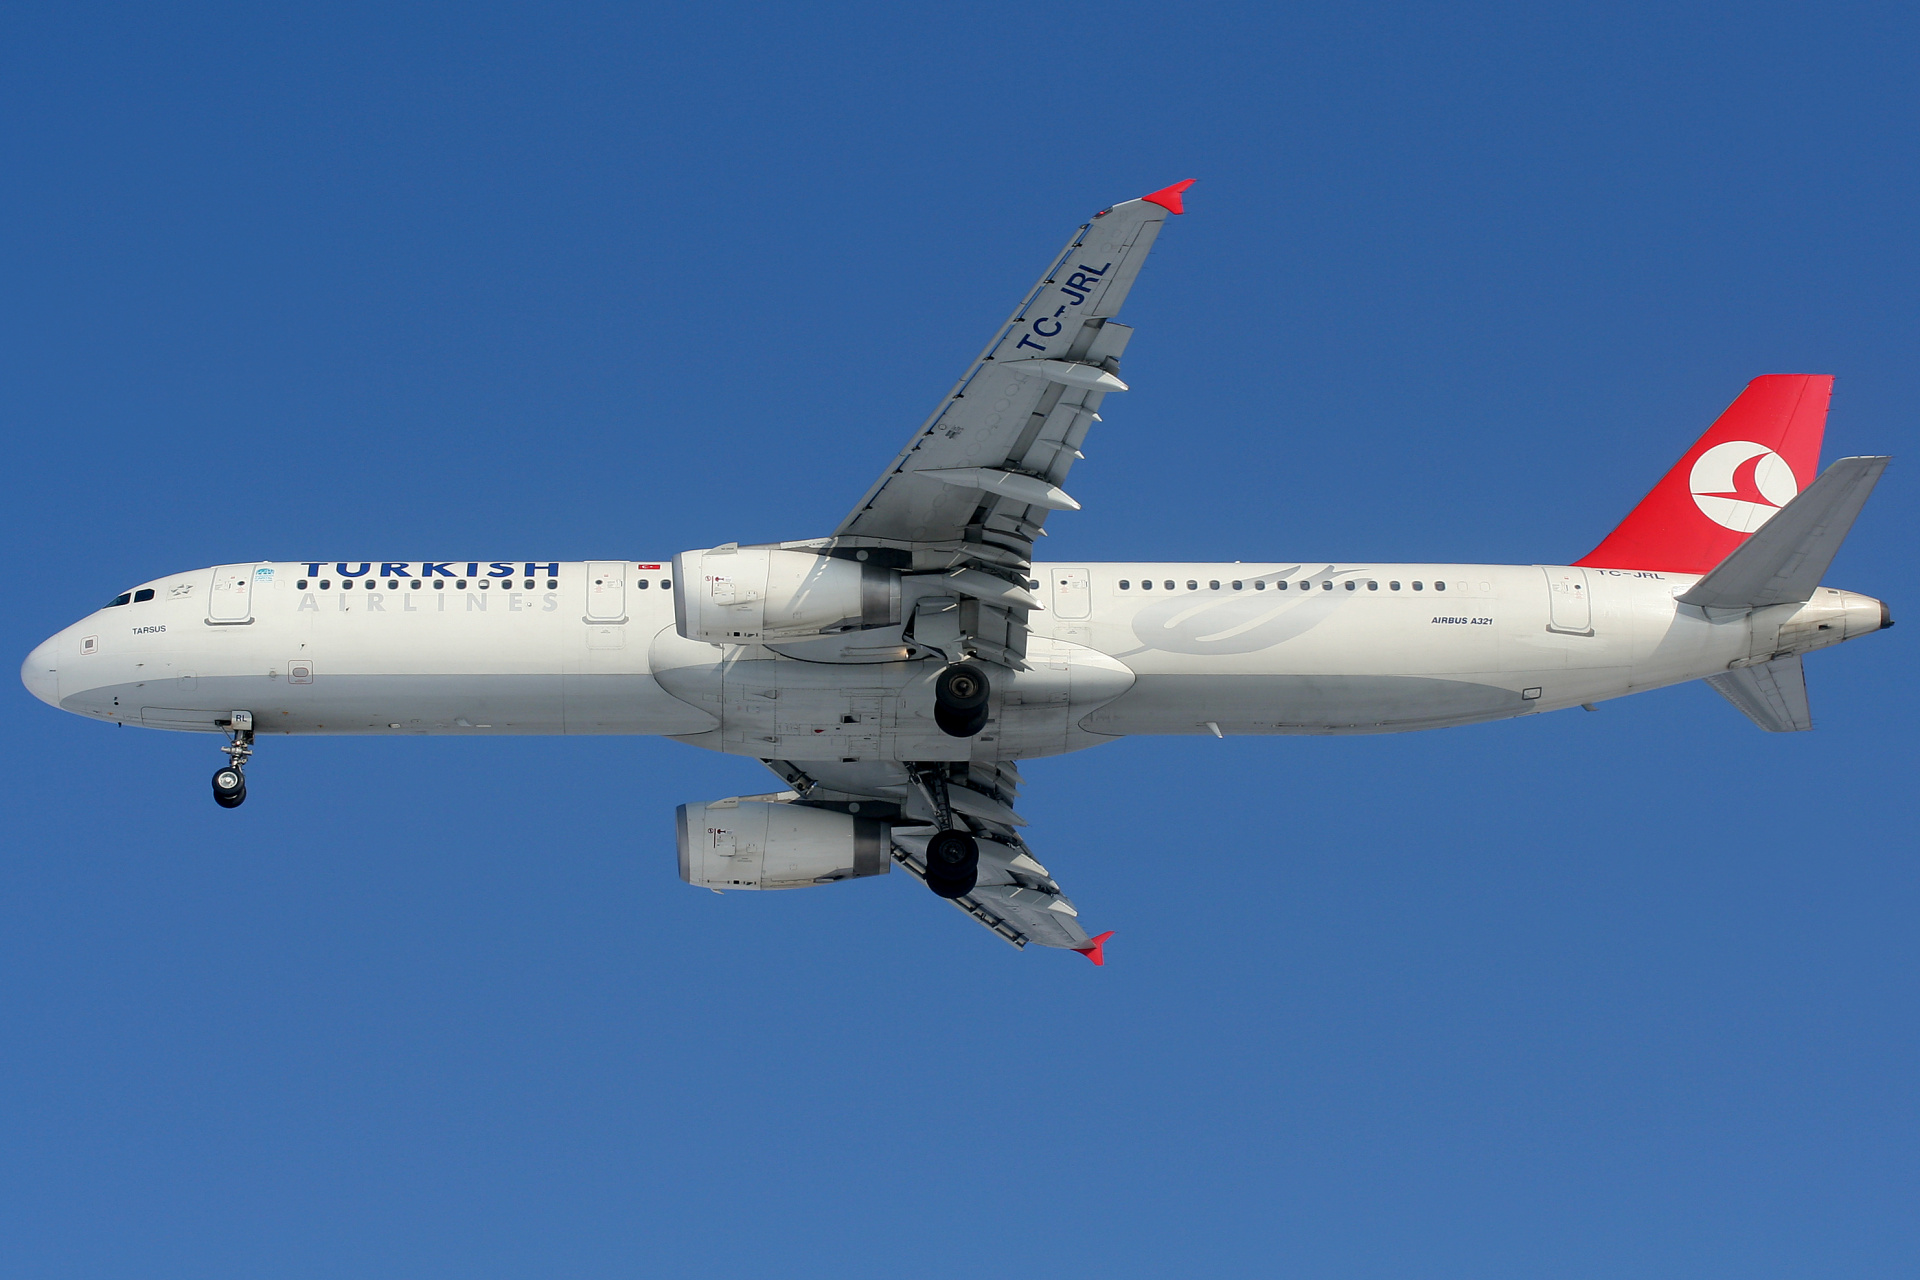 TC-JRL (Aircraft » EPWA Spotting » Airbus A321-200 » THY Turkish Airlines)